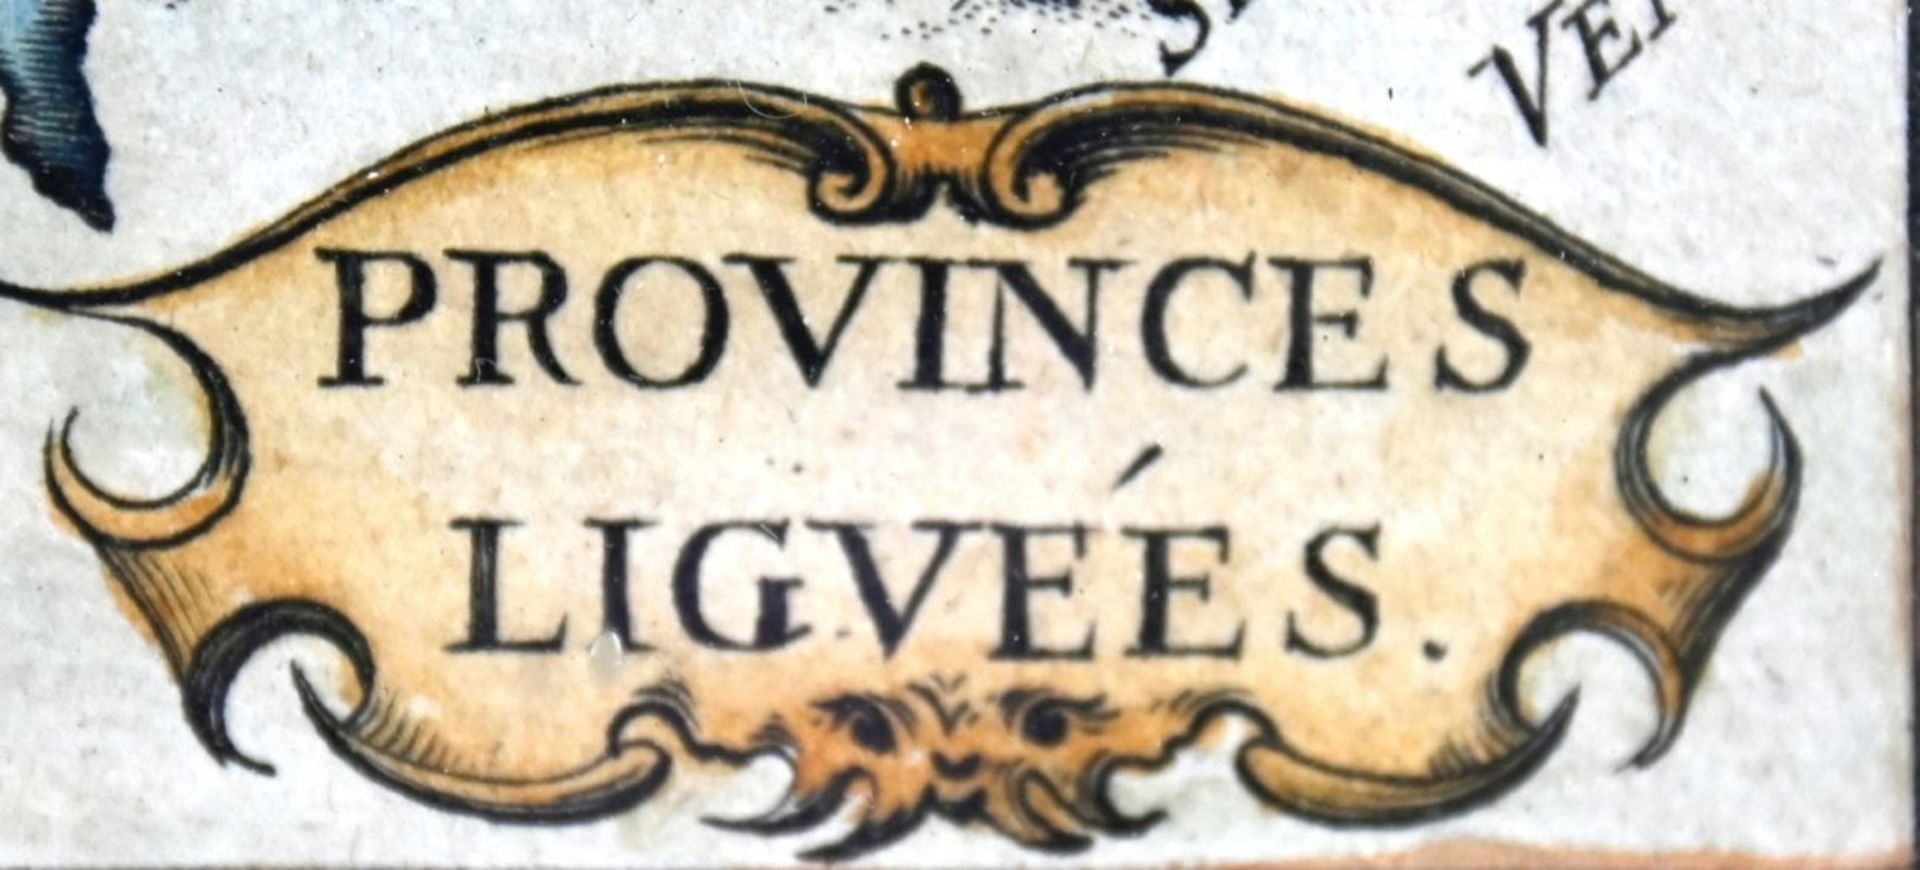 BODENSEE und ALPENRAUM "Provinces Liguées" - Image 3 of 3